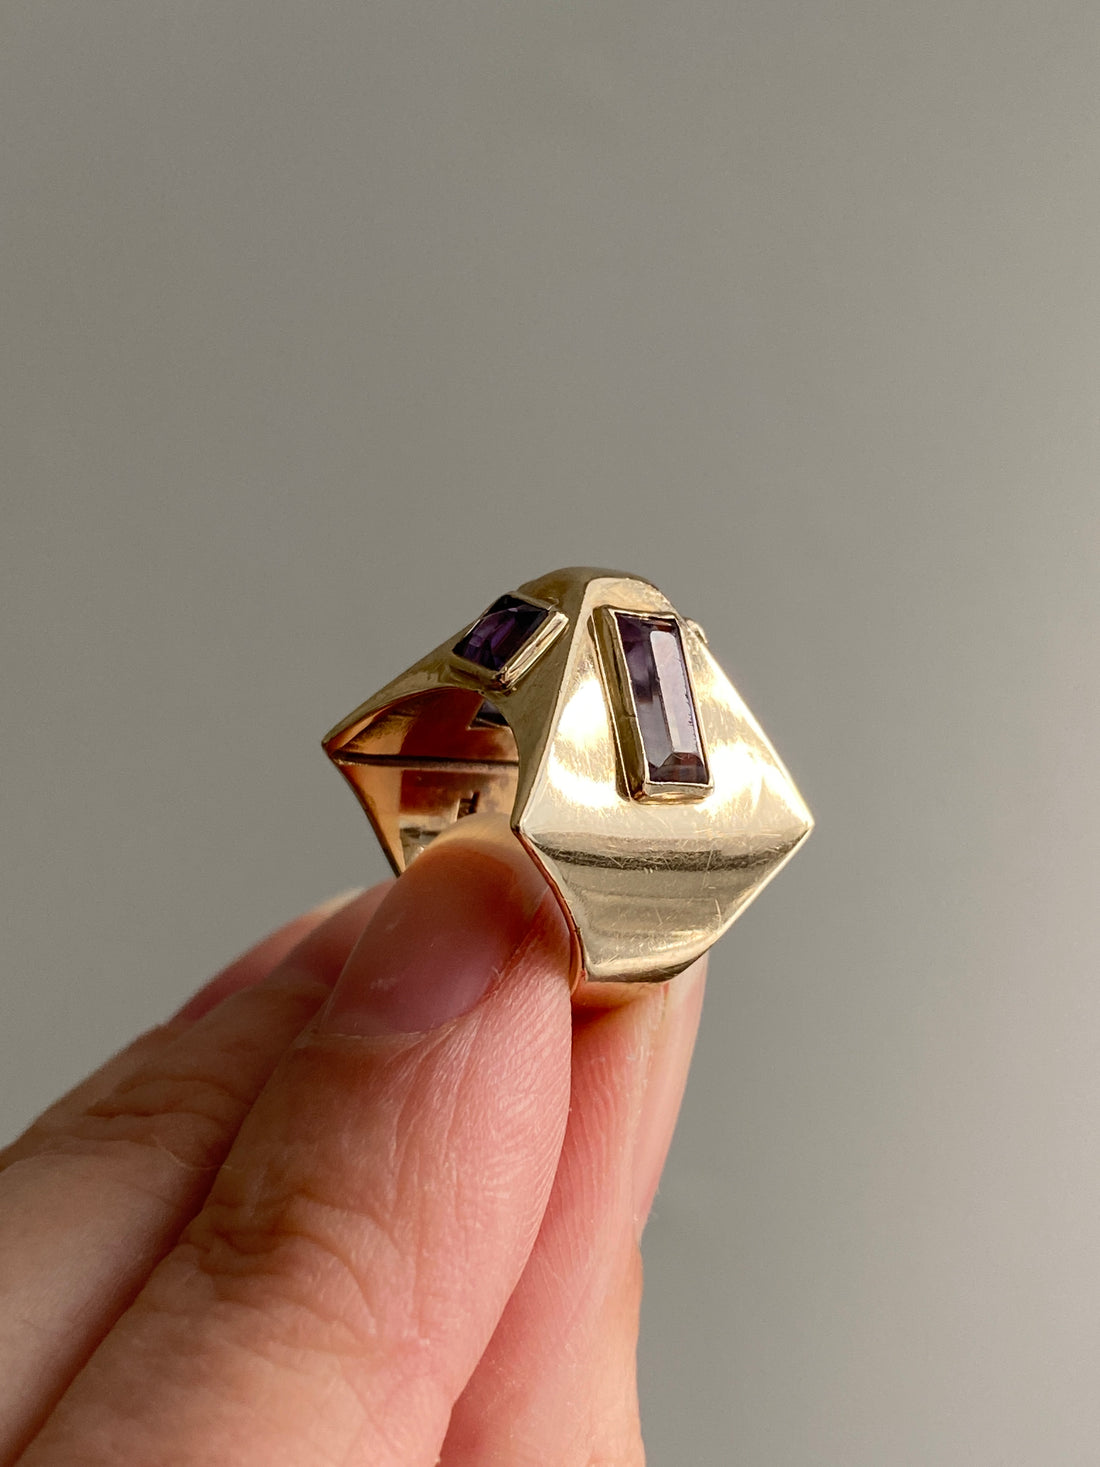 Unique Pyramid-form Amethyst and 14k Gold ring - Jørgen Larsen - size 4 - Vintage midcentury 1957-1973